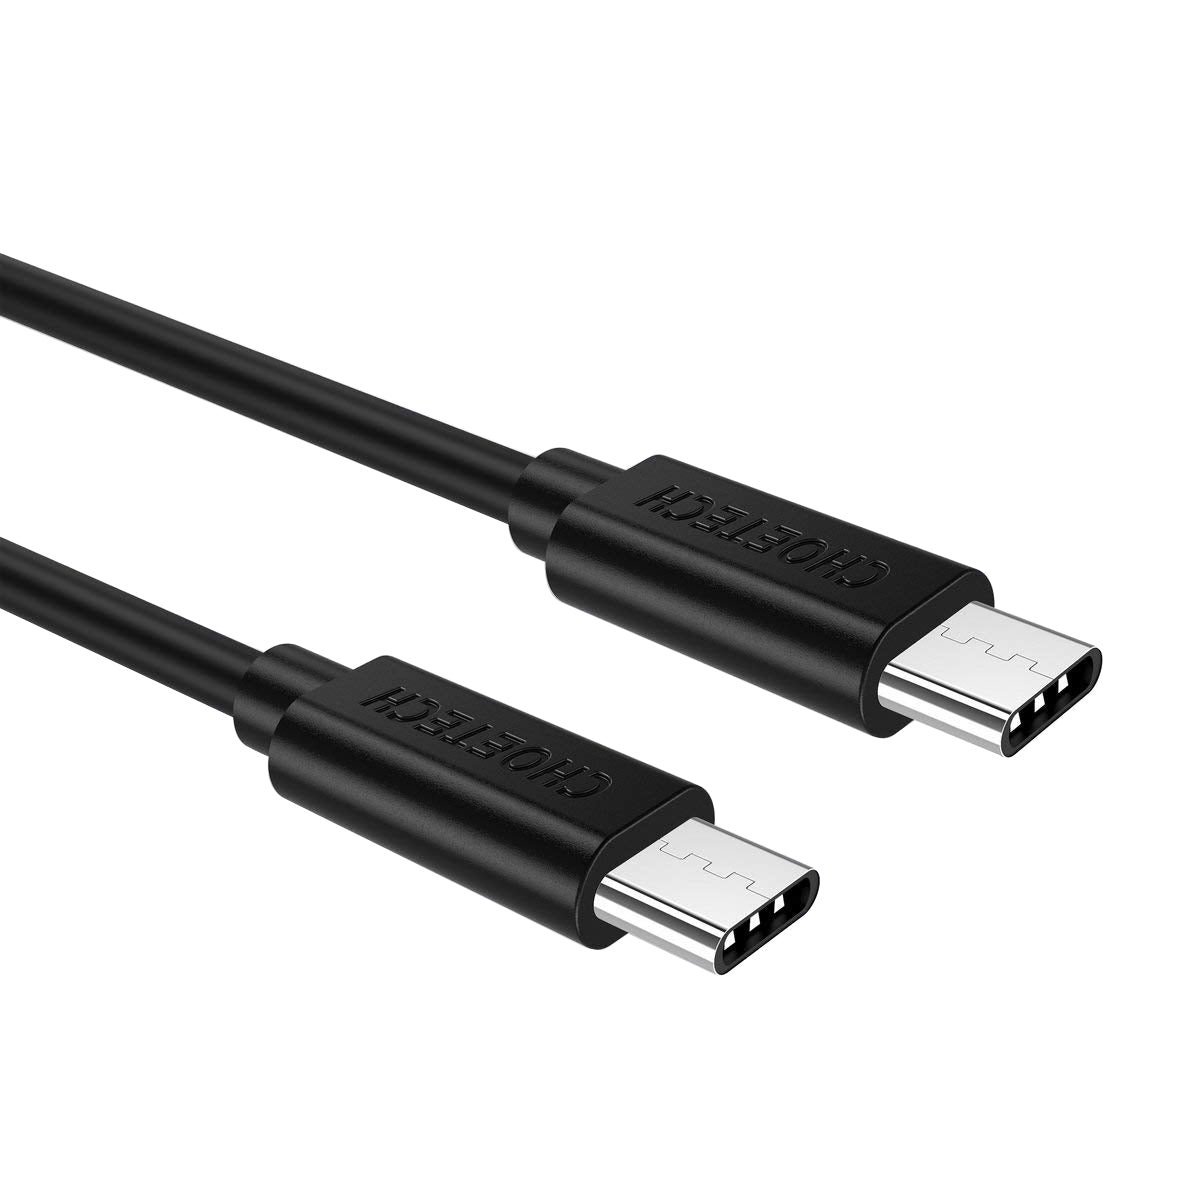 CC0003 Cable USB C, CHOETECH 3A USB-C a USB-C Cable 6.6ft(2m) para Nexus 6P/5X,Nintendo Switch,Galaxy S8/S8+,Google Pixel,Huawei Matebook,MacBook y más dispositivos USB tipo C